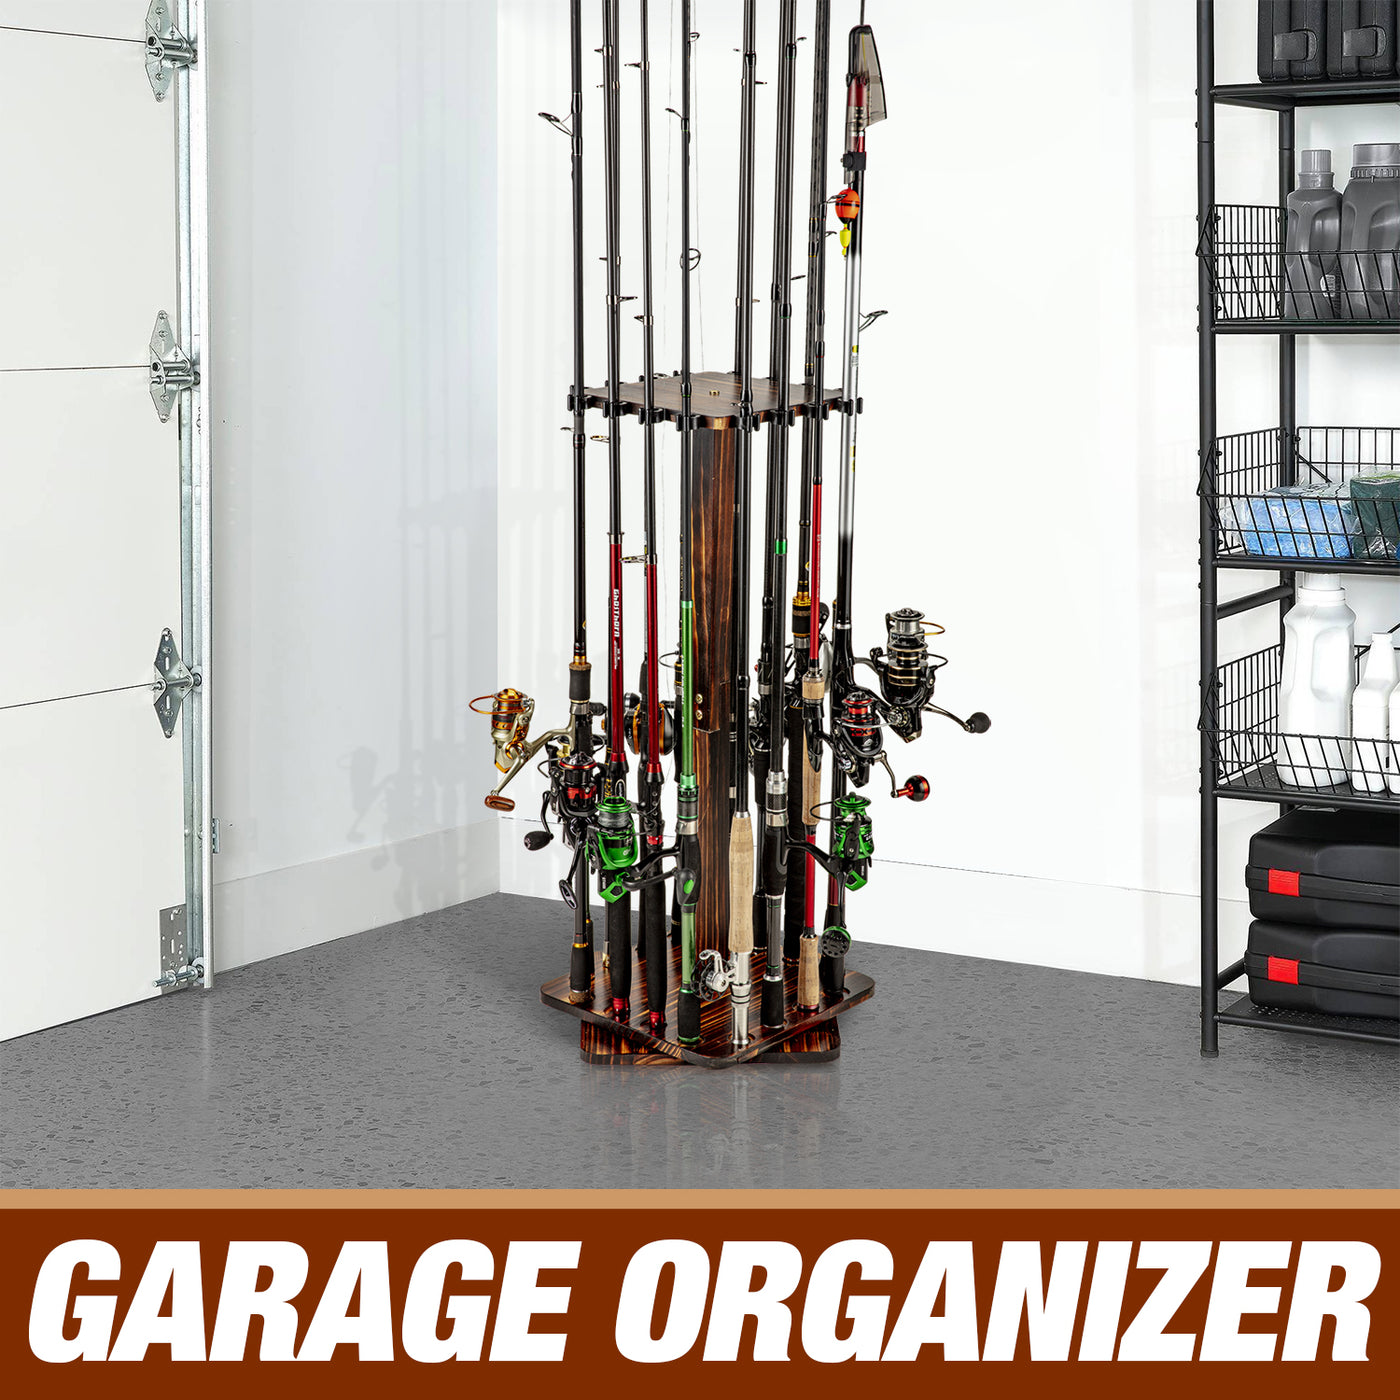 Organized Fishing Round Floor Rack for Fishing Rod Storage, Holds